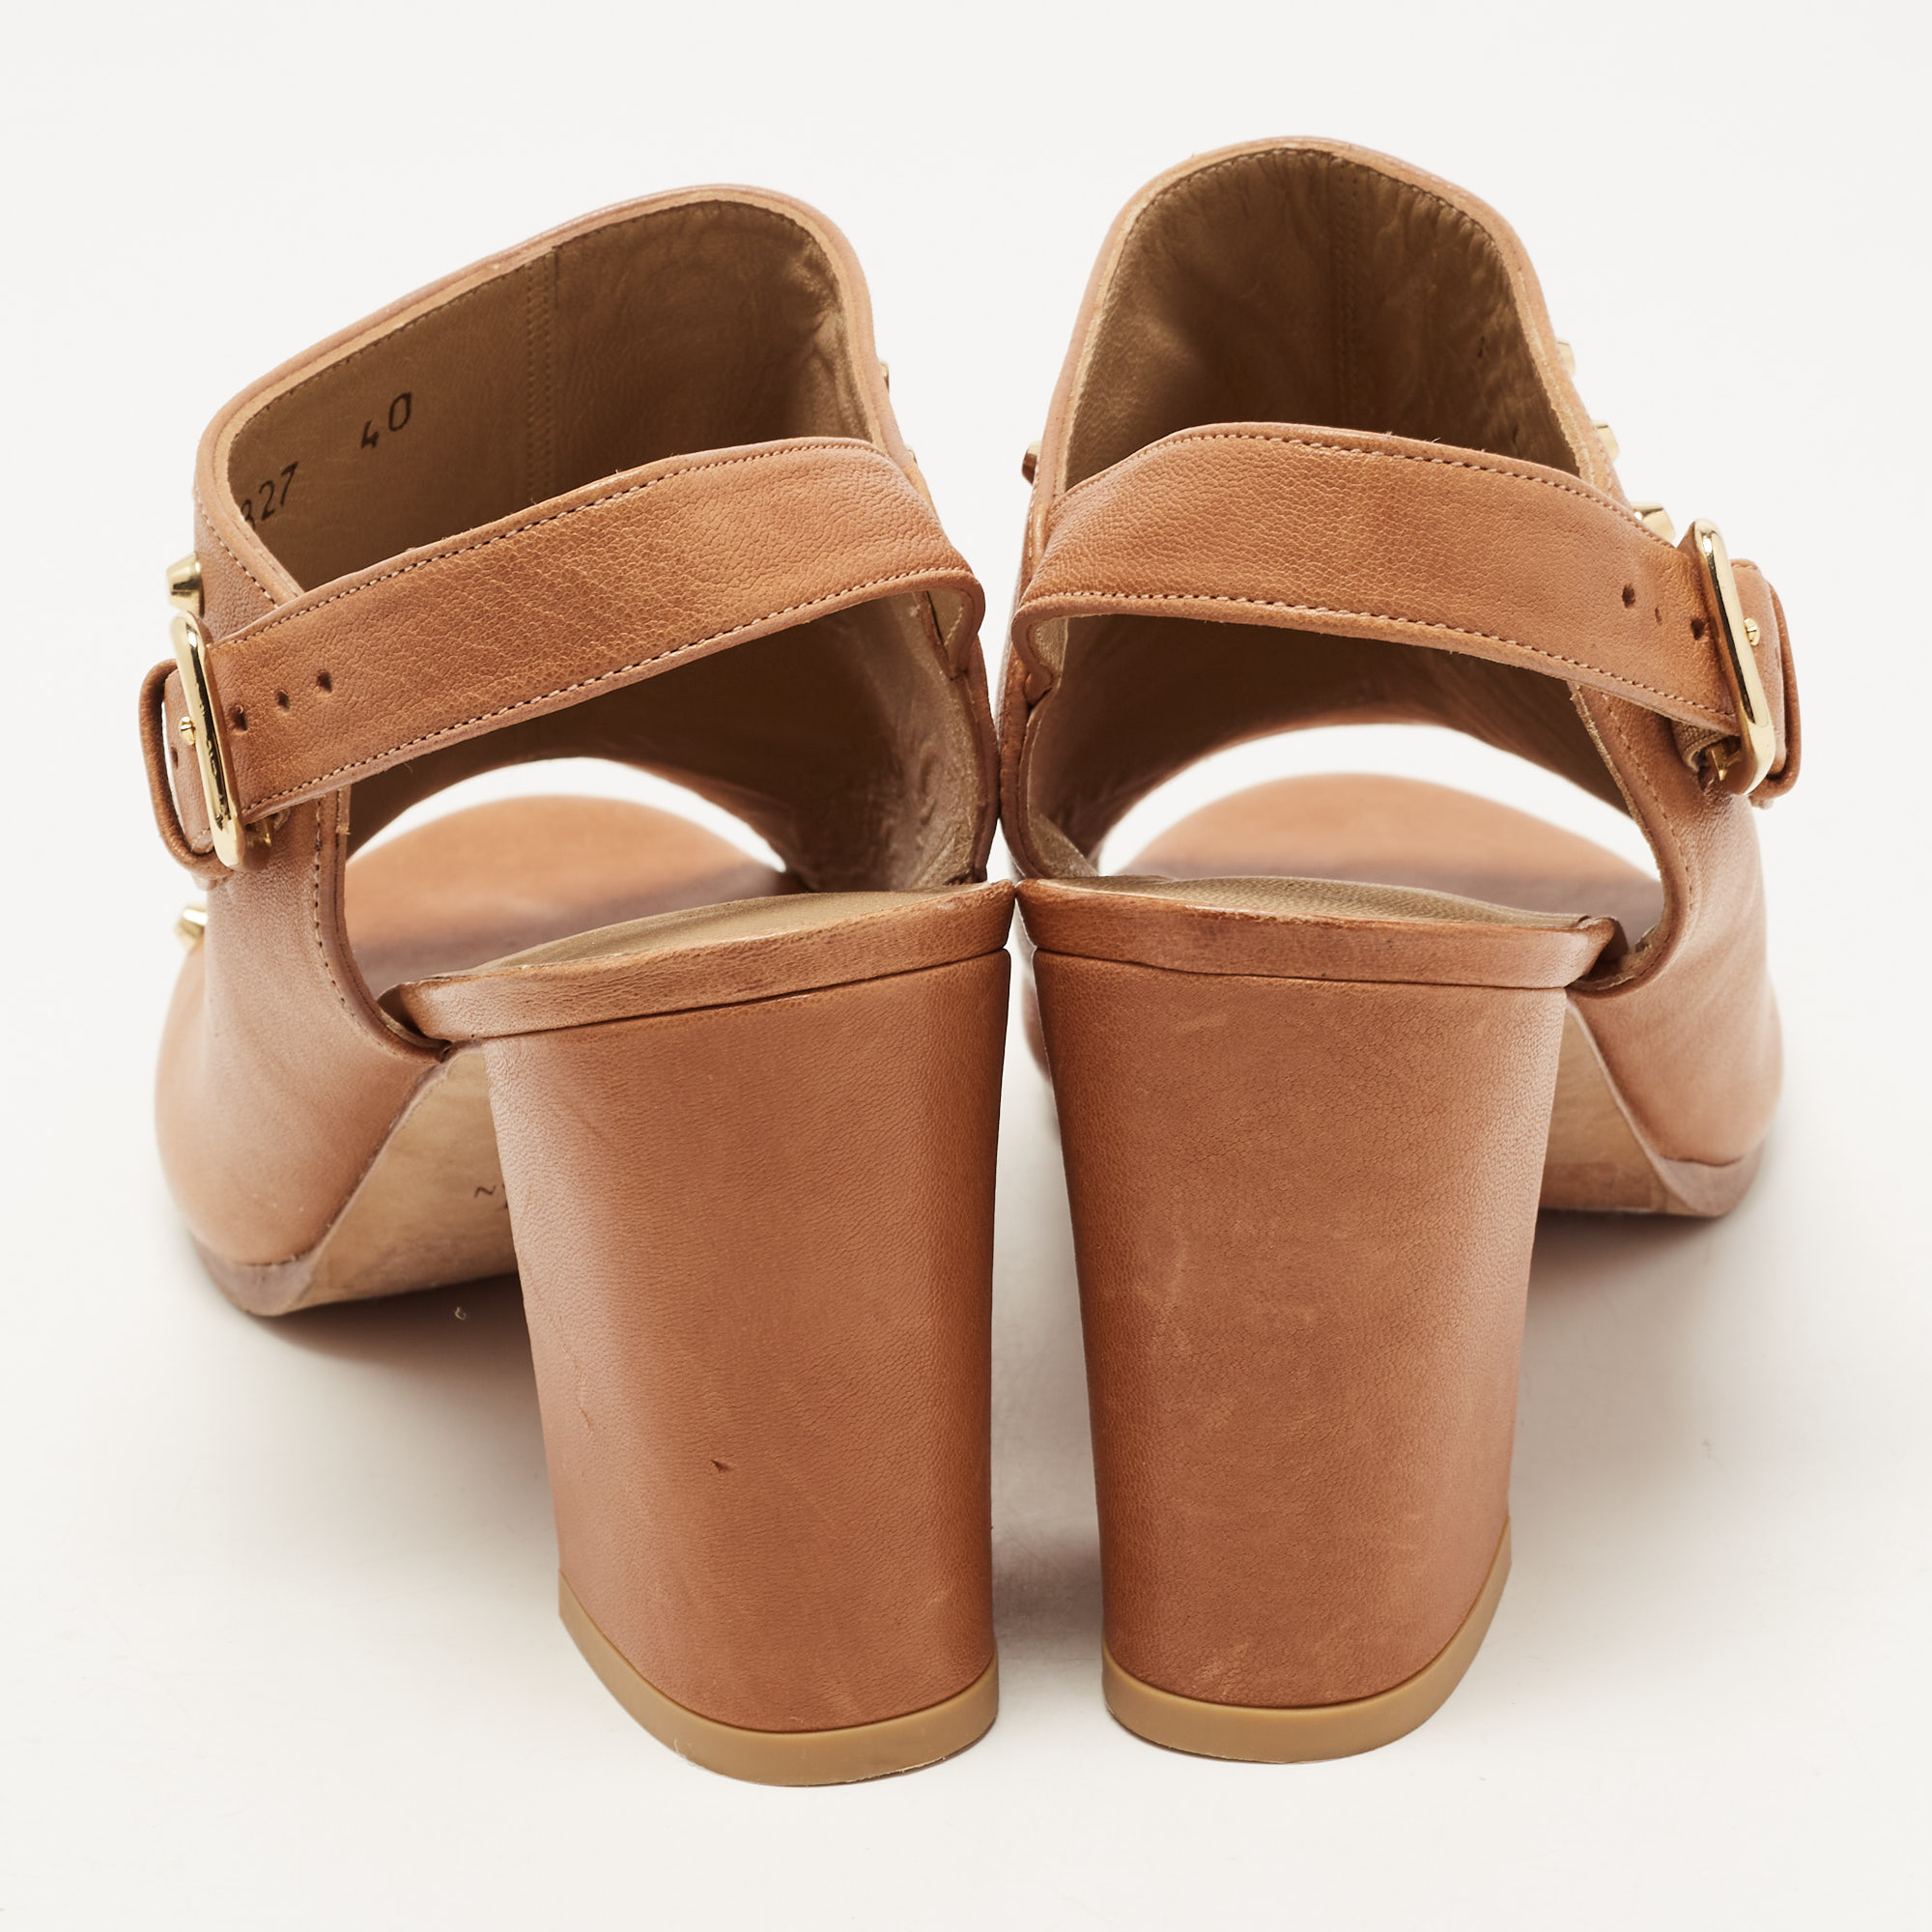 Stuart Weitzman Brown Leather Studded Slingback Block Heel Sandals Size 40